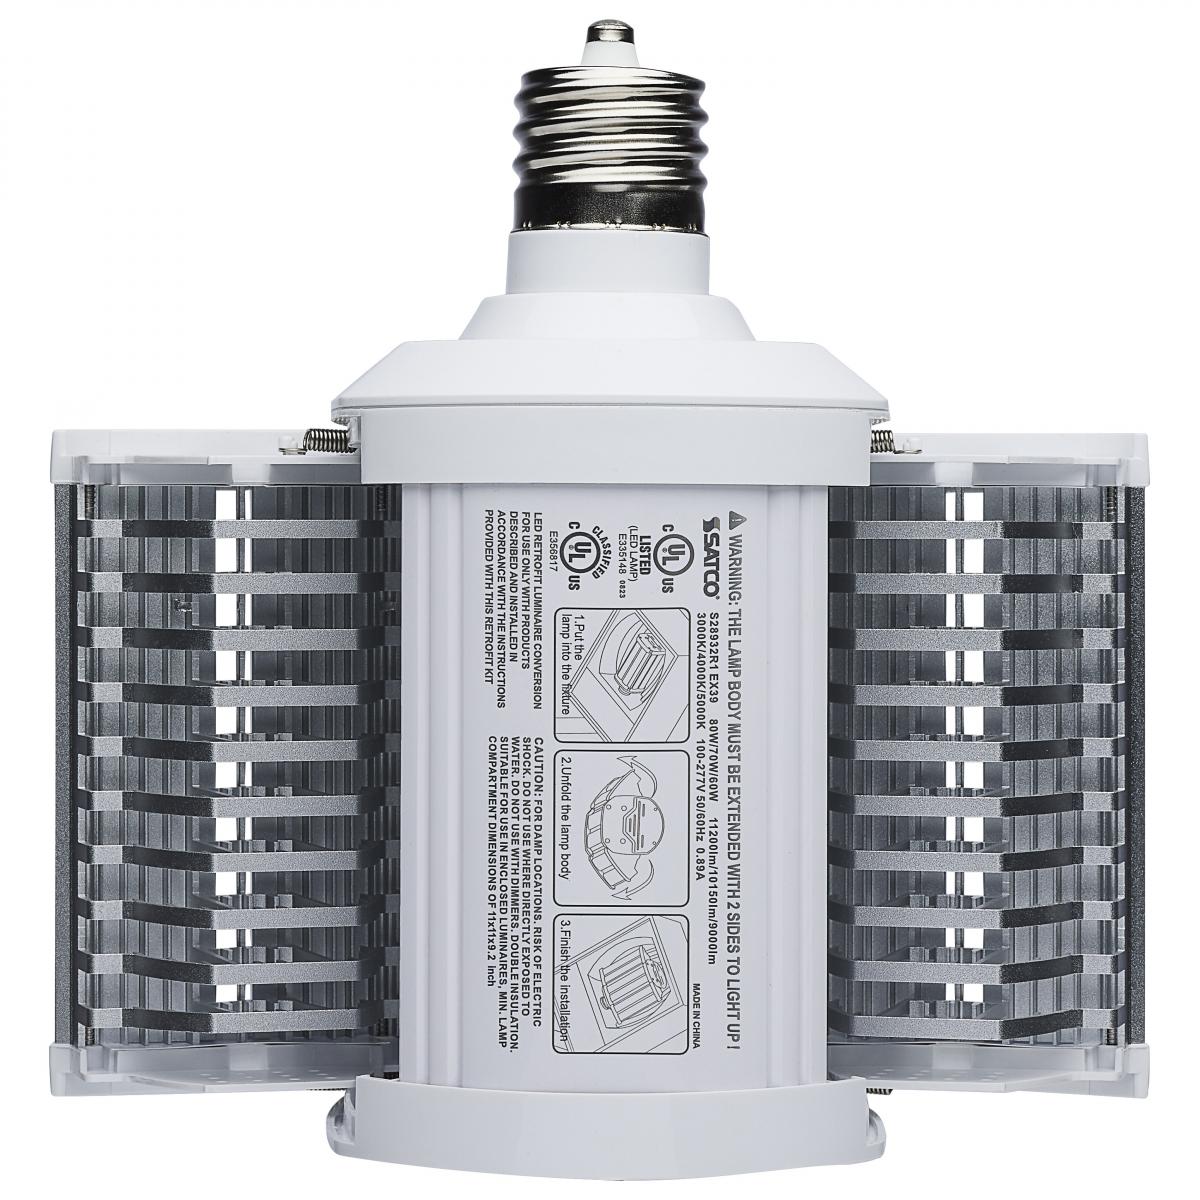 Wall Pack/Shoebox LED Retrofit Lamp, Wattage Selectable 60W/70W/80W, 11200 Lumens, Selectable CCT 30K/40K/50K, EX39 Mogul Extended Base, 120-277V - Bees Lighting